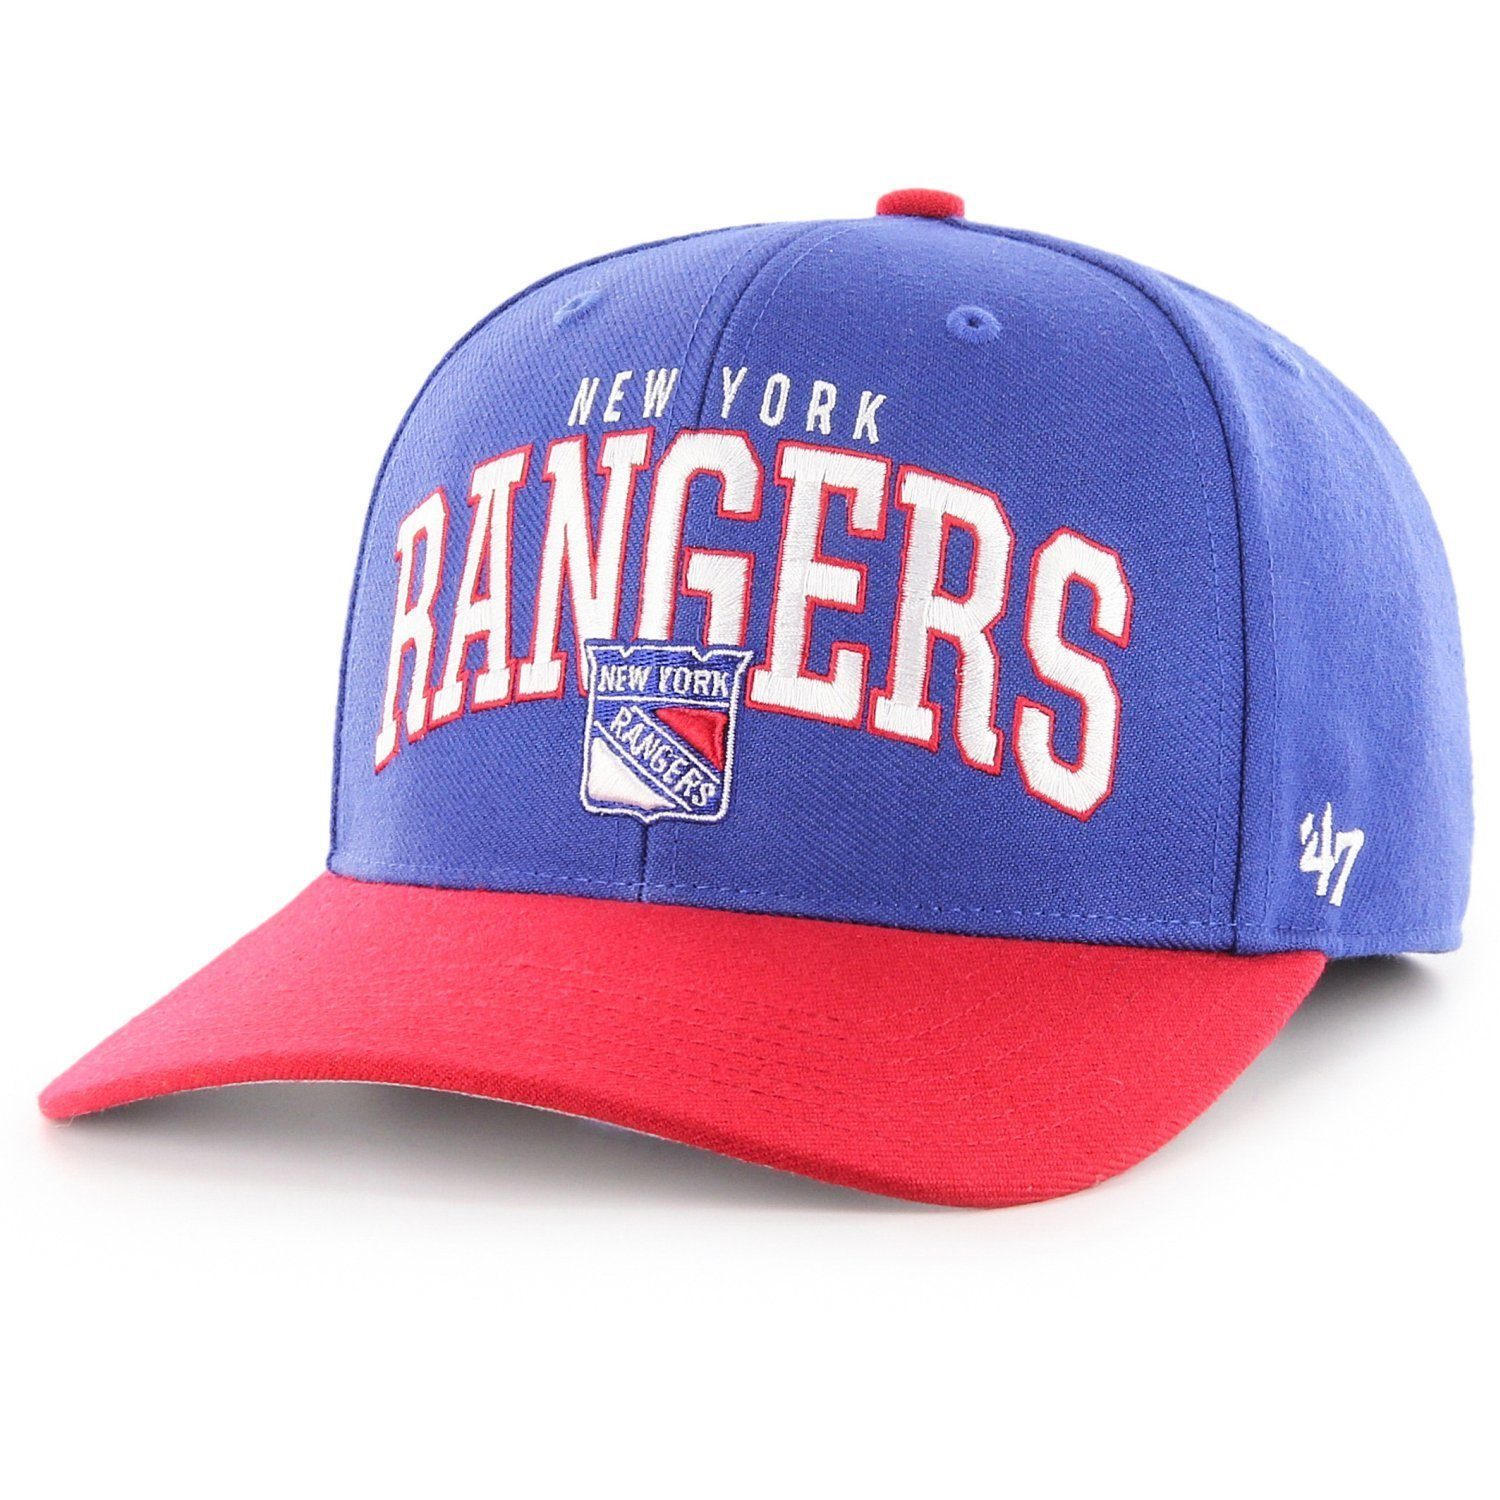 York Brand Profile Rangers New Low '47 Cap Baseball McCaw